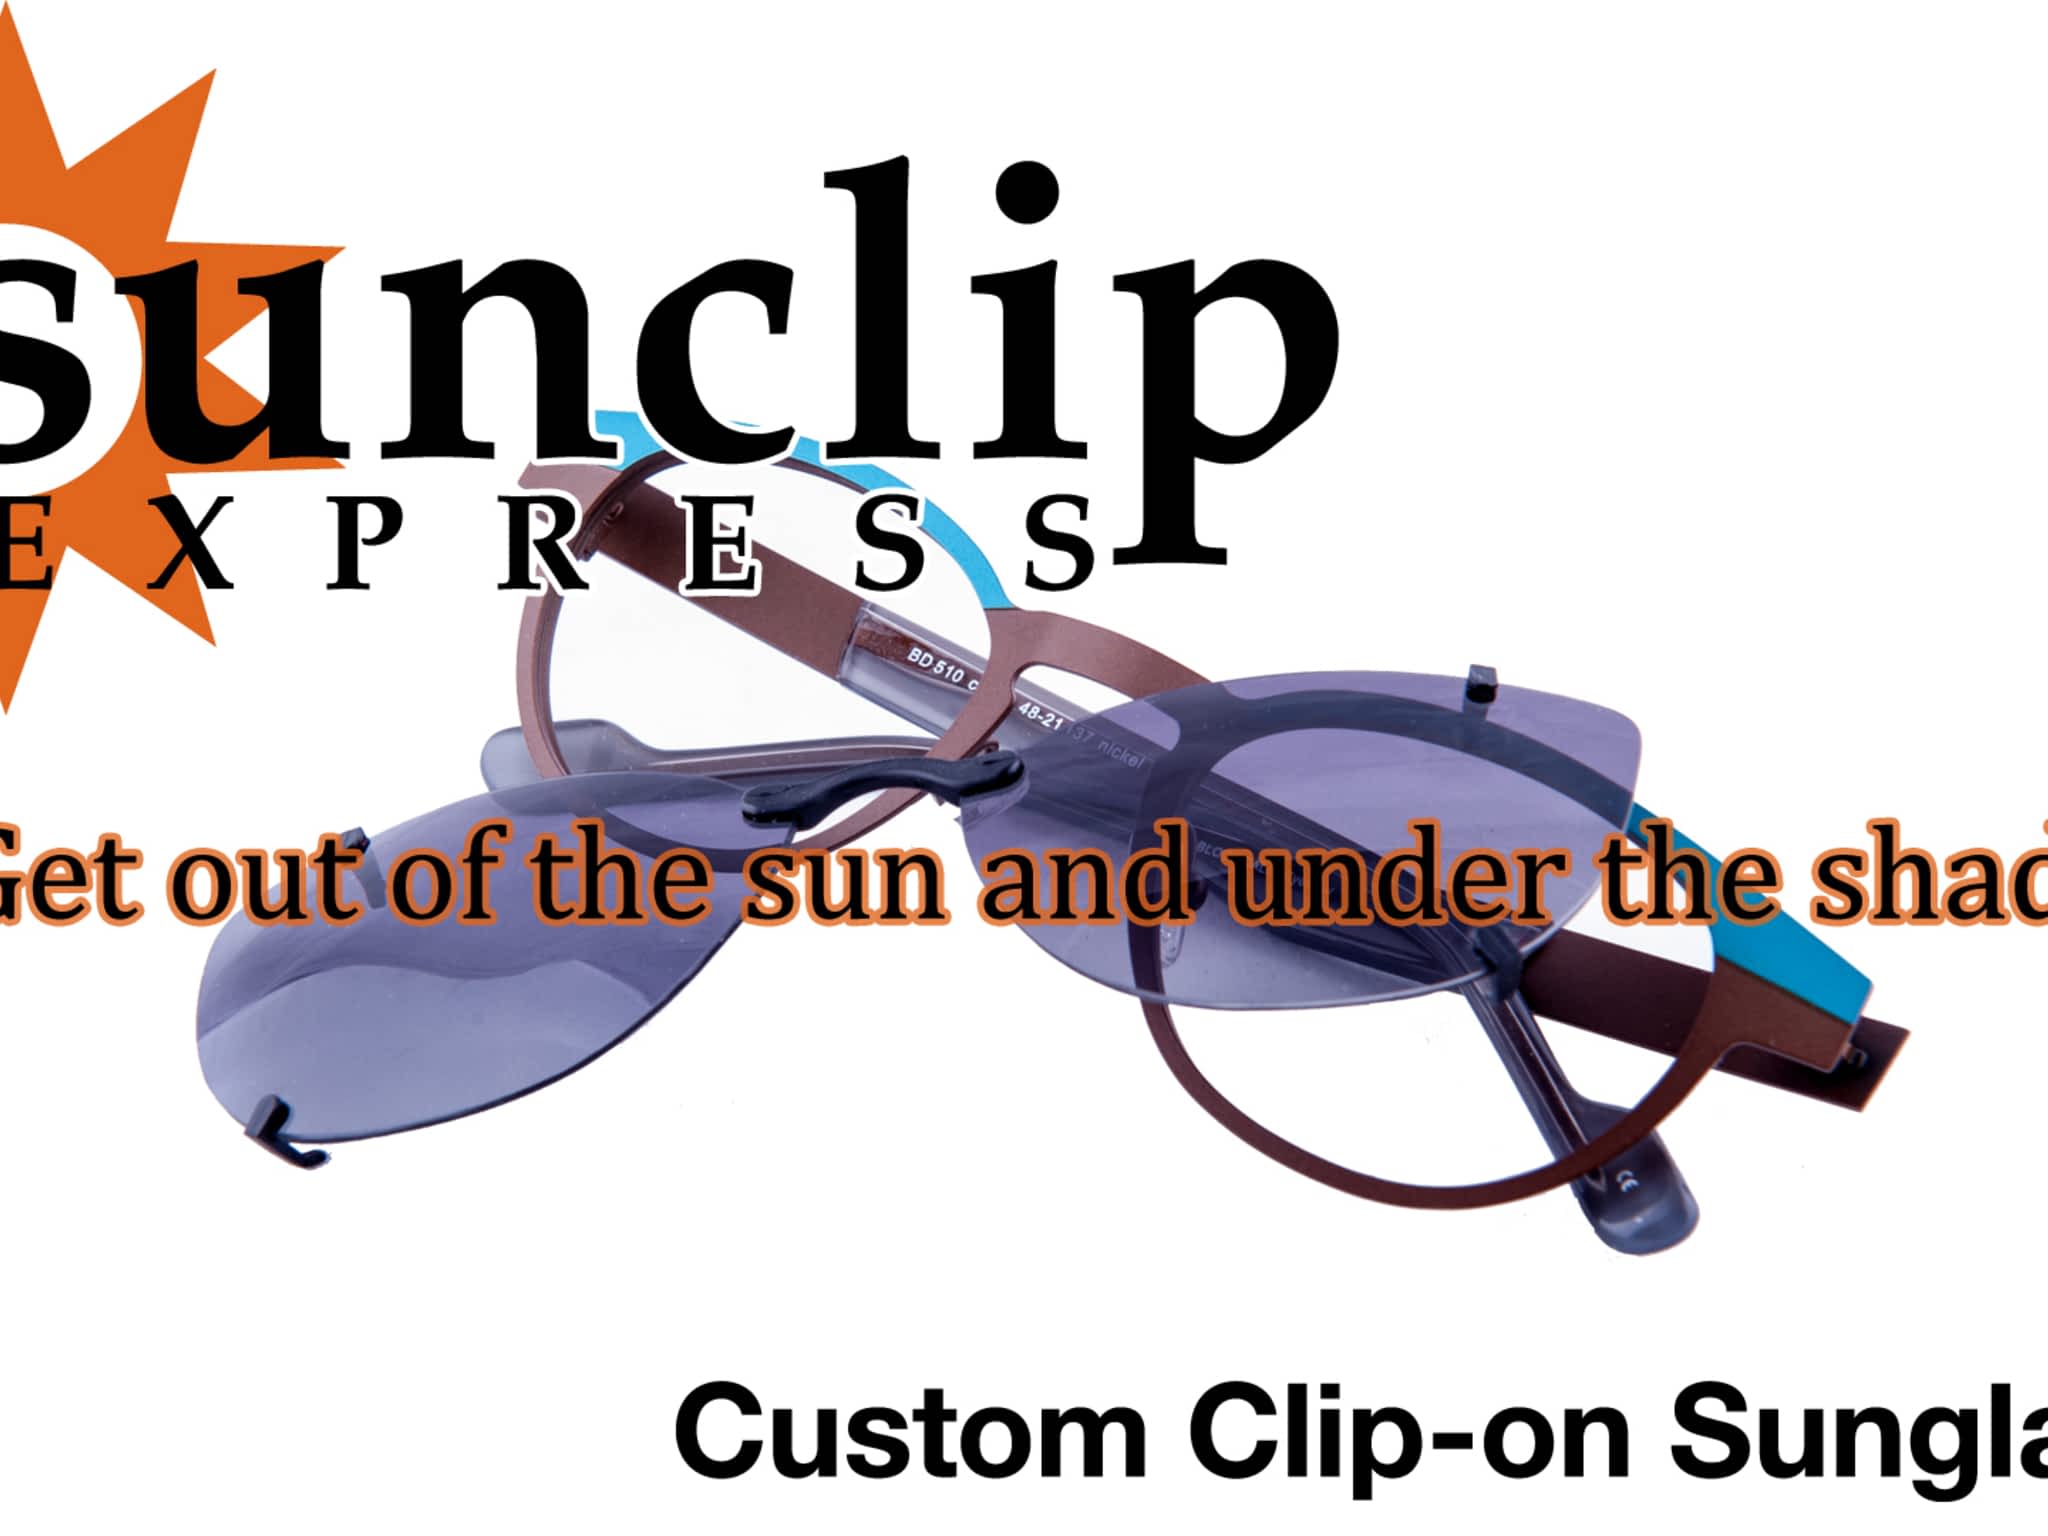 photo Sunclip Express Ltd